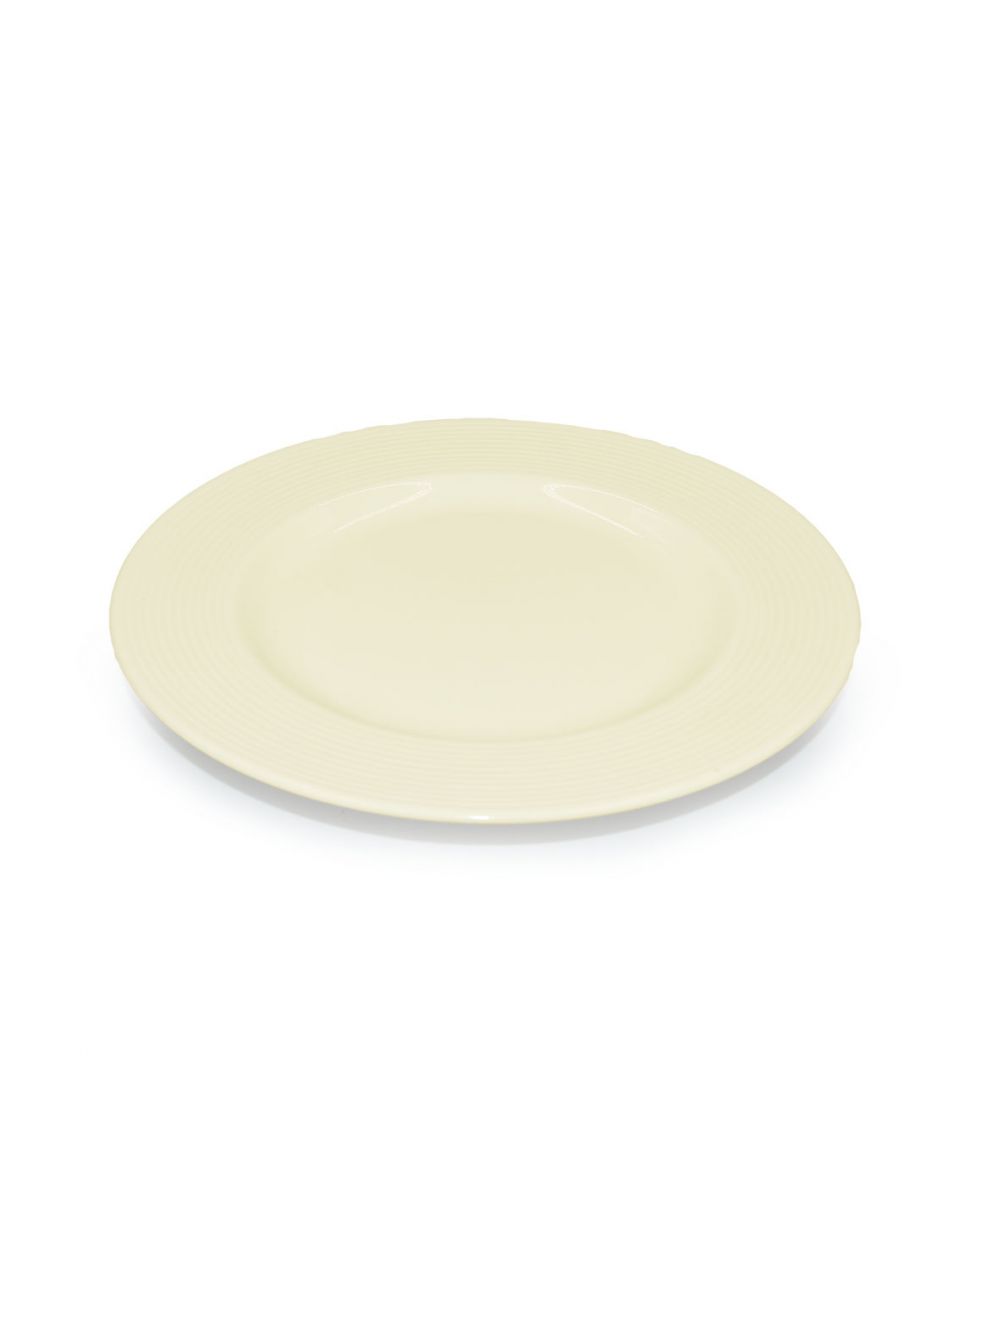 Plate - White 17 cm